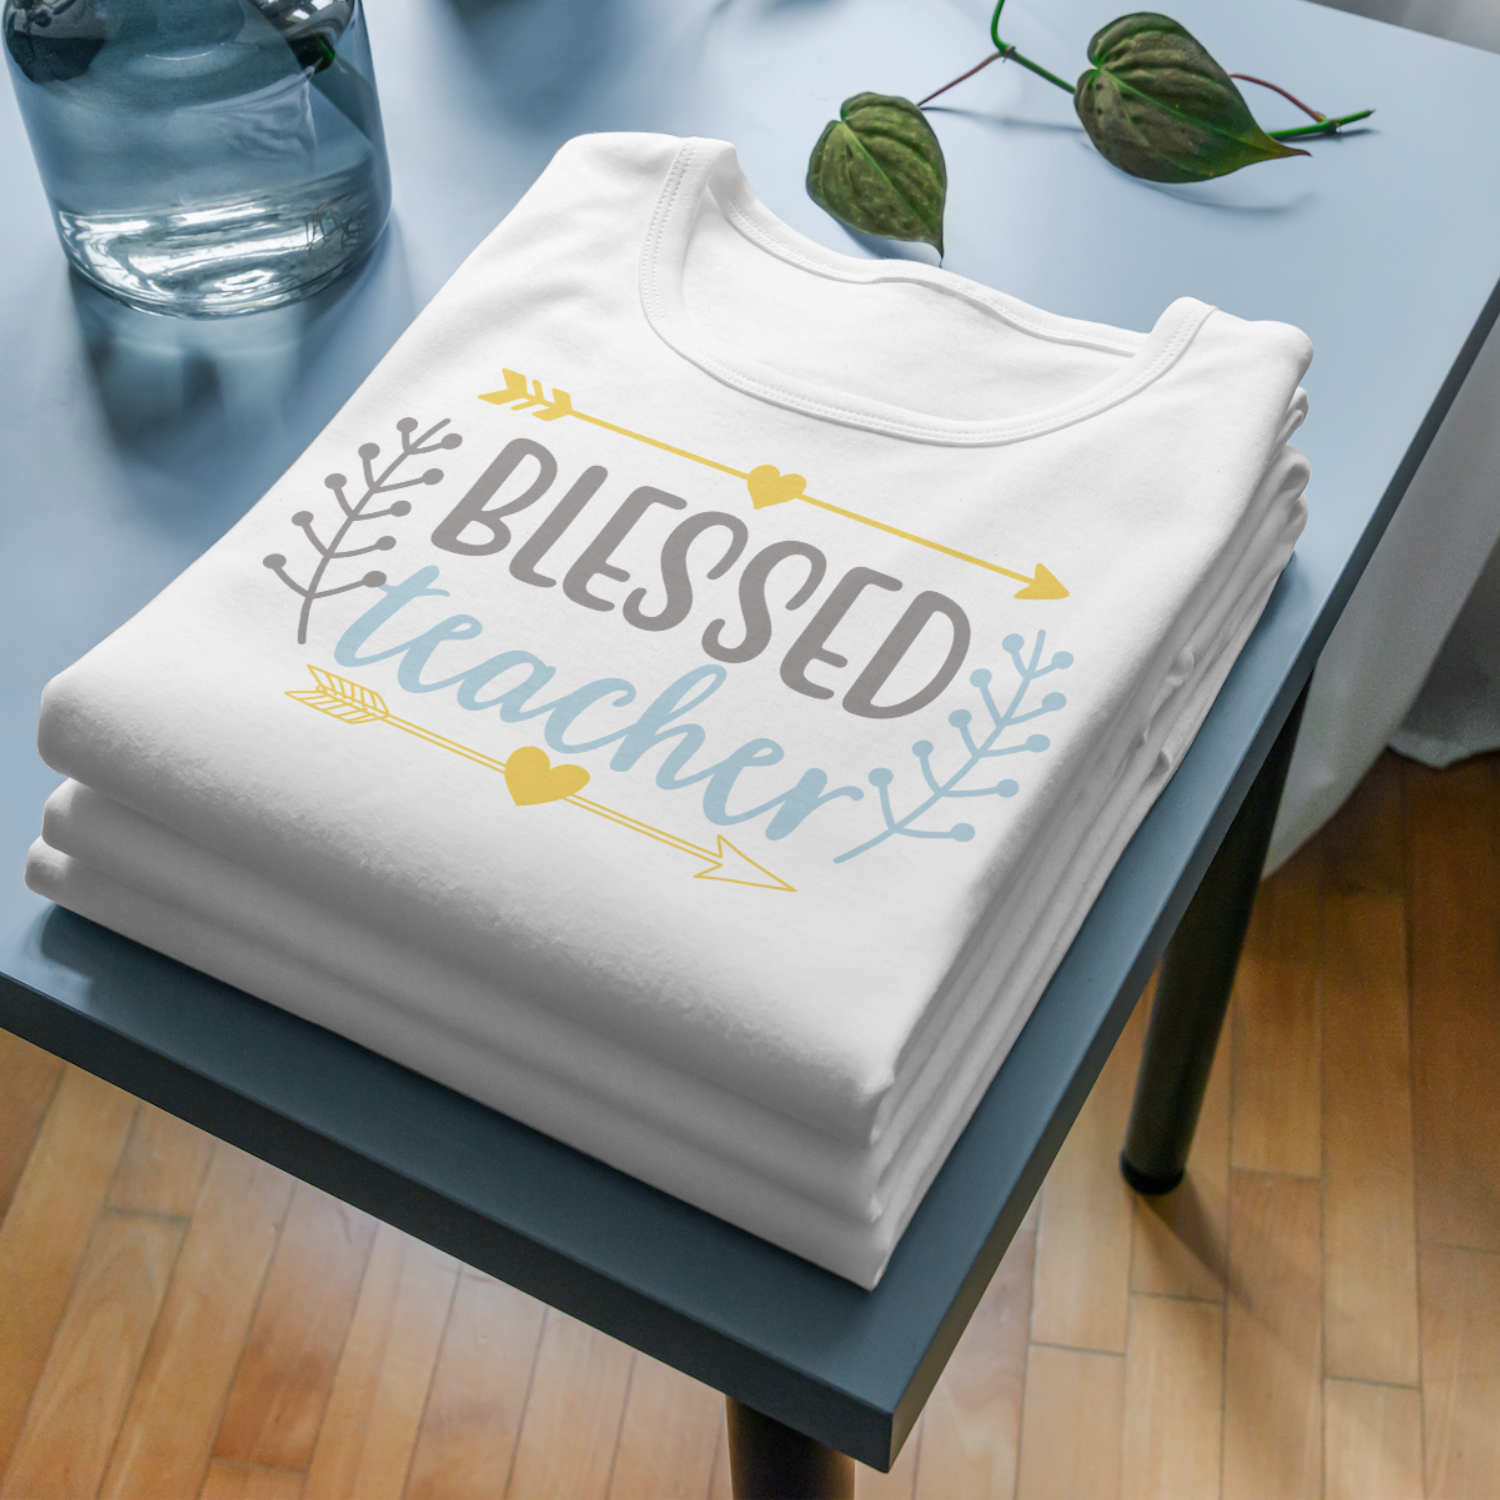 Blessed Teacher SVG | Digital Download | Cut File | SVG - Only The Sweet Stuff